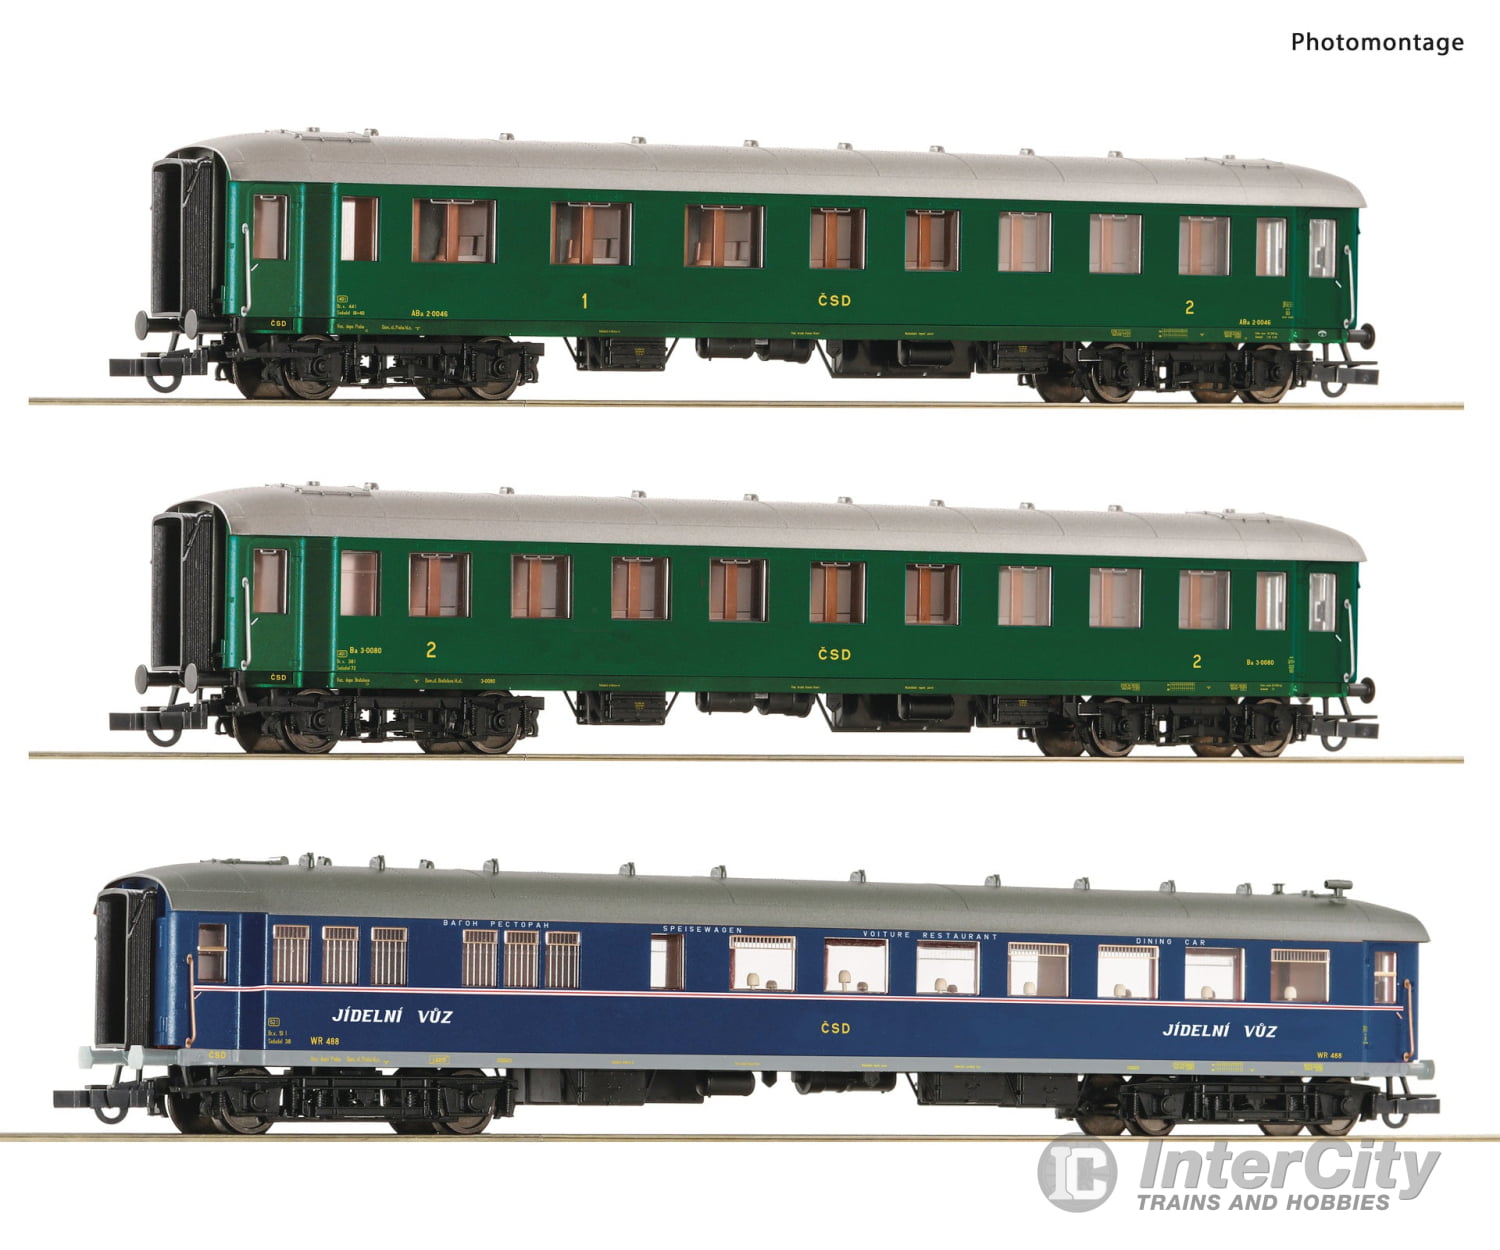 Roco 6200036 Ho 3 Piece Set 1: Express Train Coaches Csd Era 4 European Passenger Cars